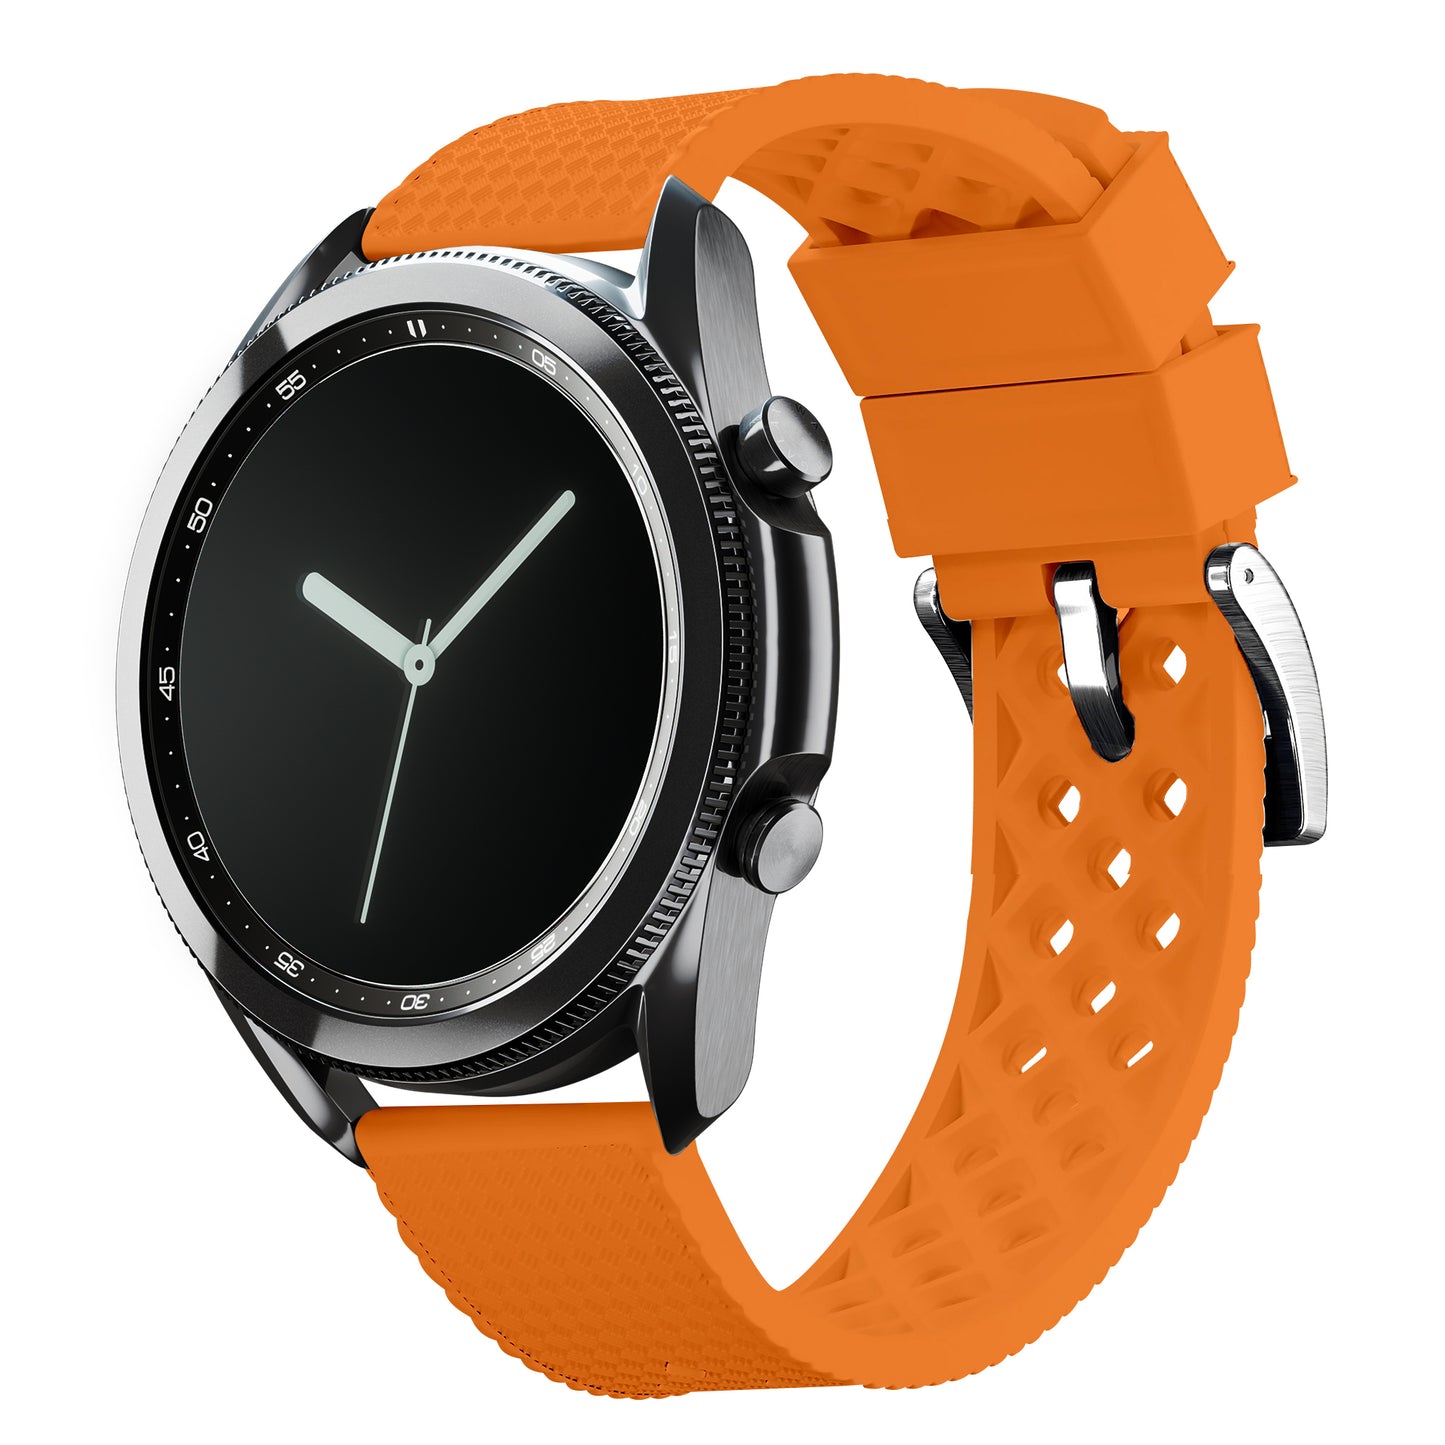 Samsung Galaxy Watch3 Tropical Style Orange Watch Band